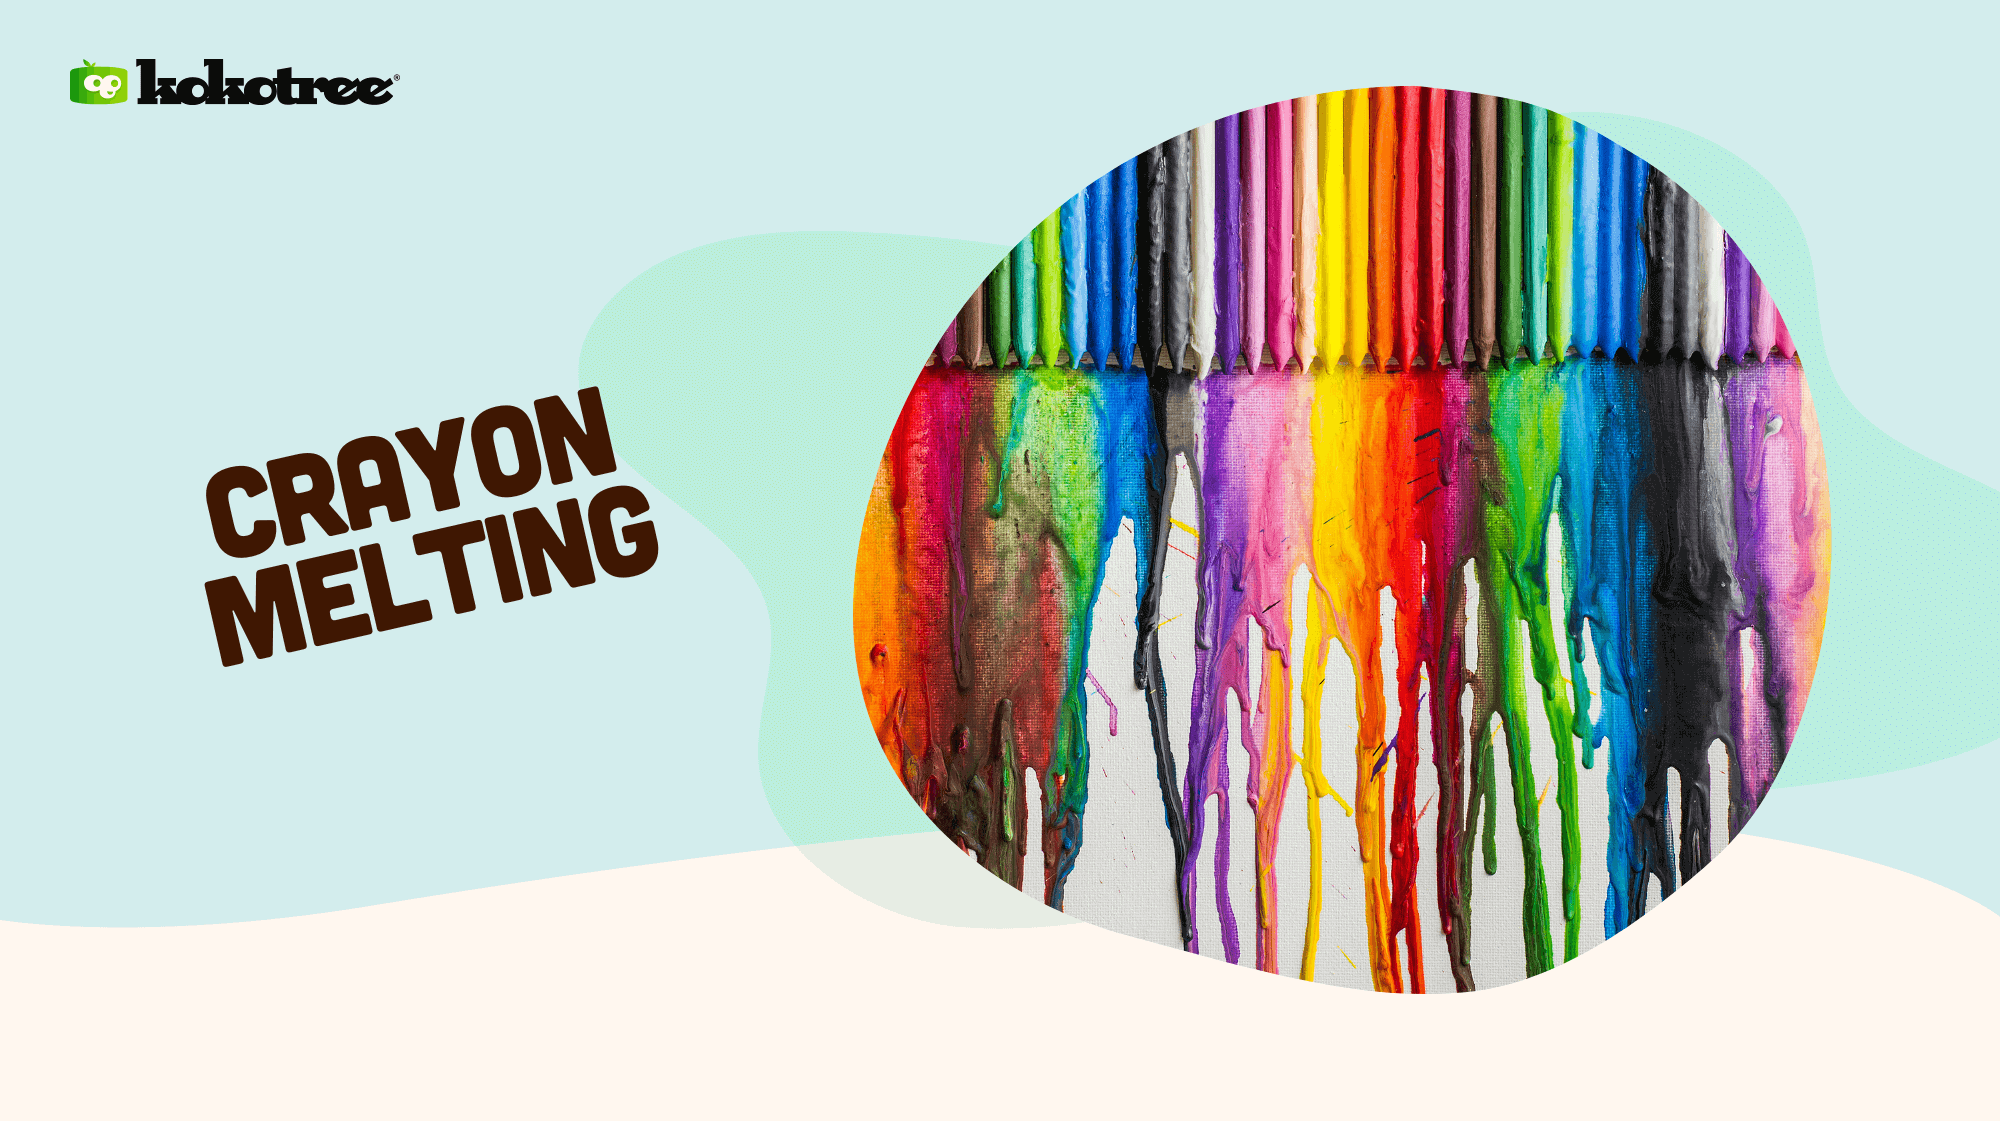 crayon melting for preschoolers